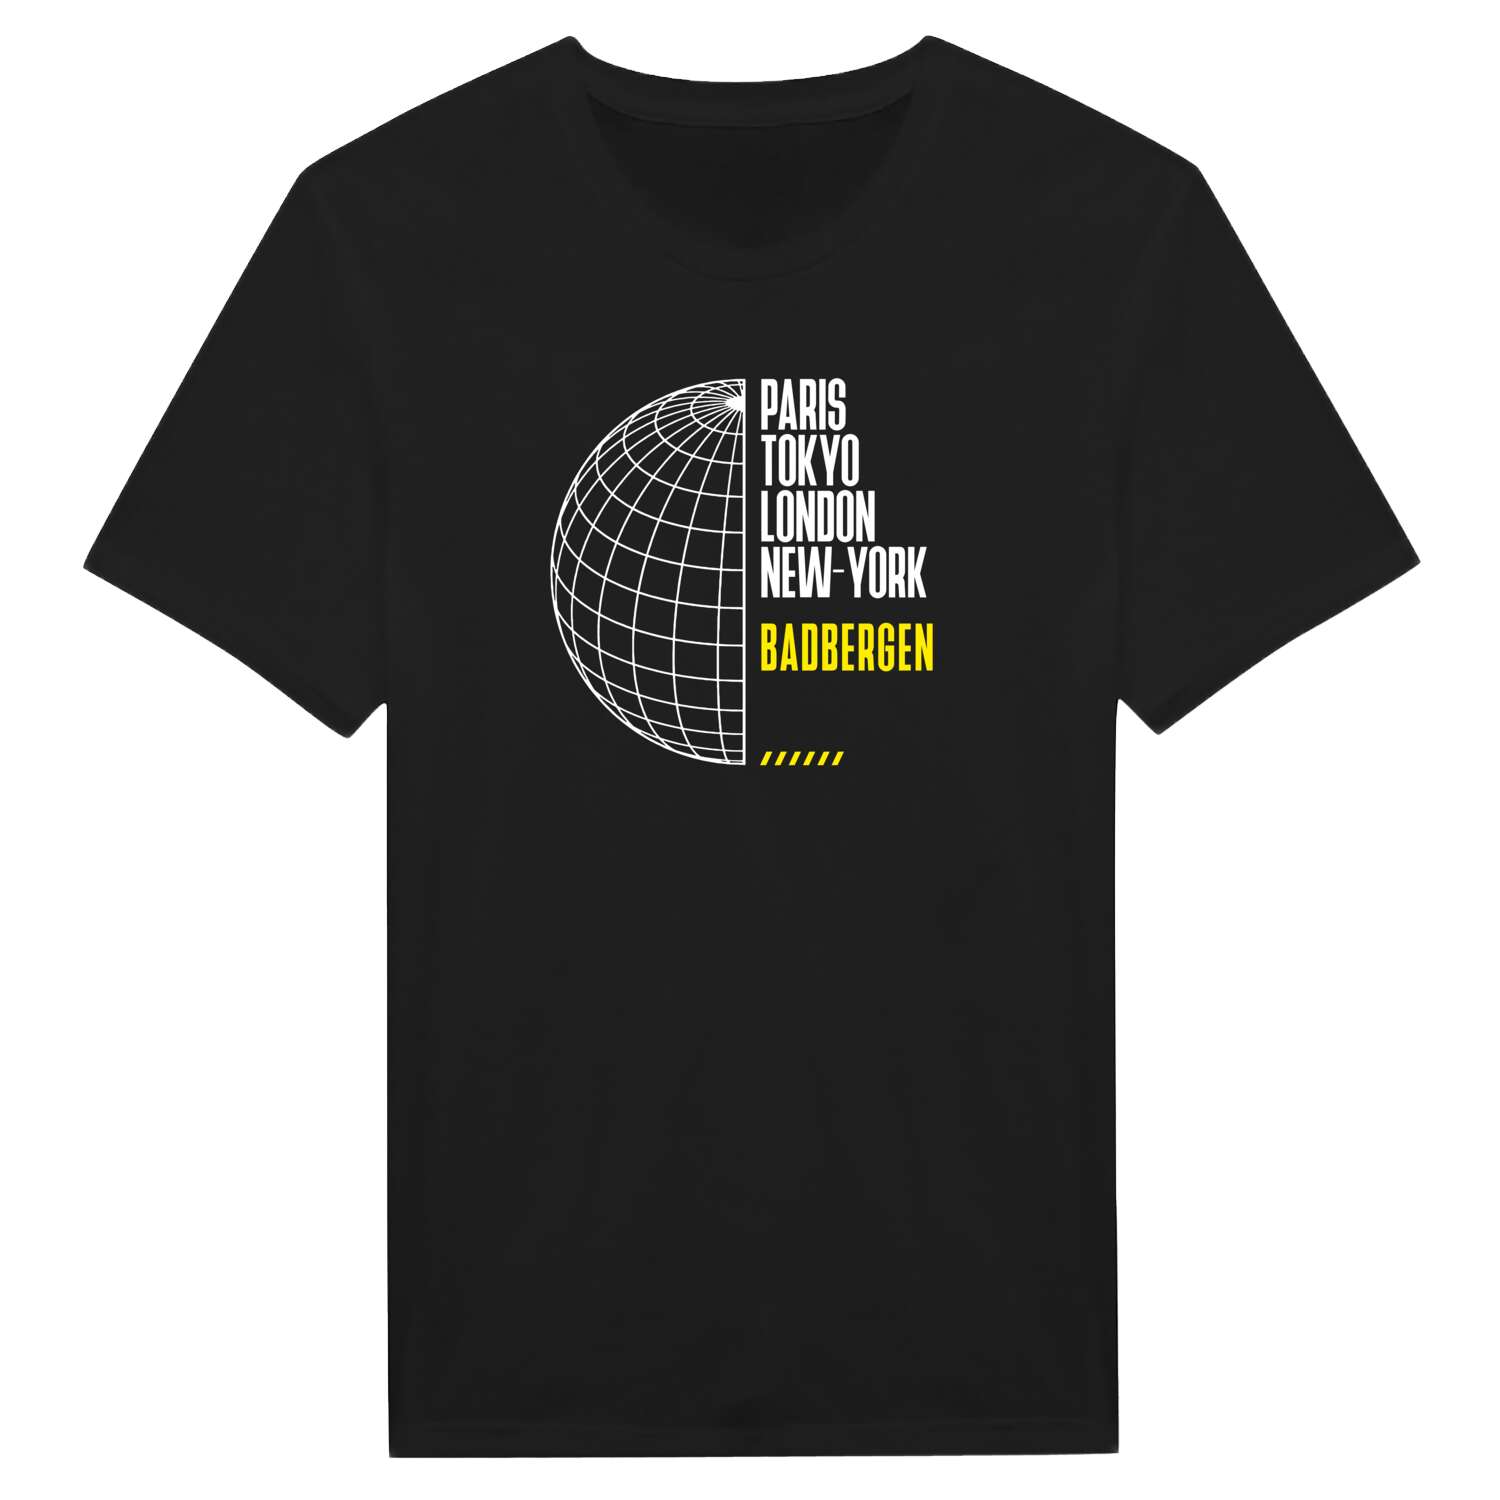 Badbergen T-Shirt »Paris Tokyo London«